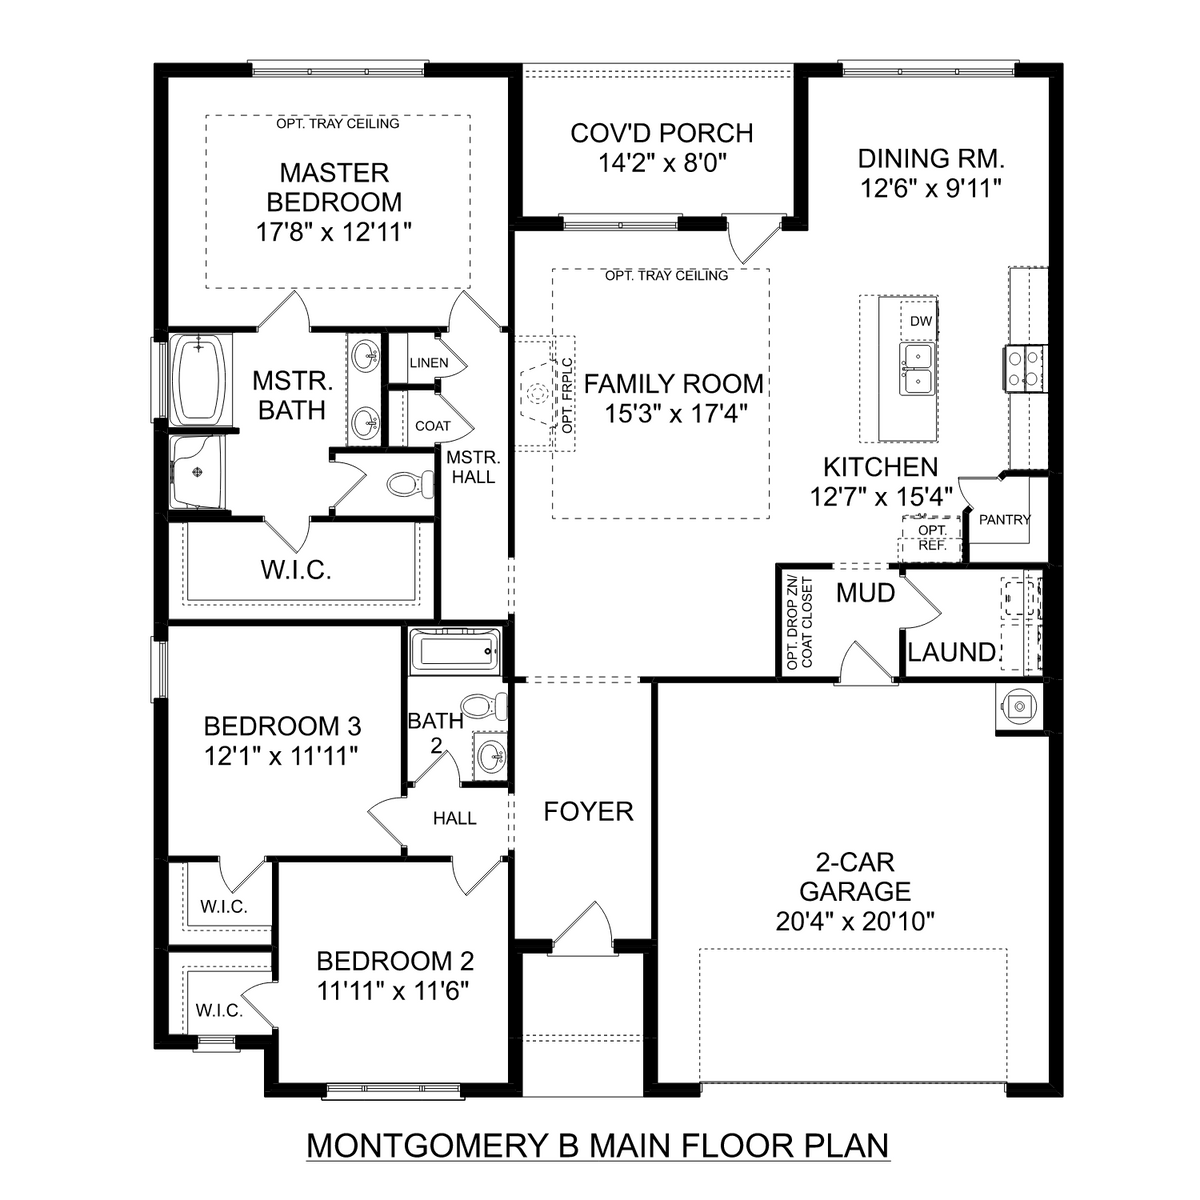 1 - The Montgomery B floor plan layout for 2108 Brandon Drive in Davidson Homes' North Ridge community.